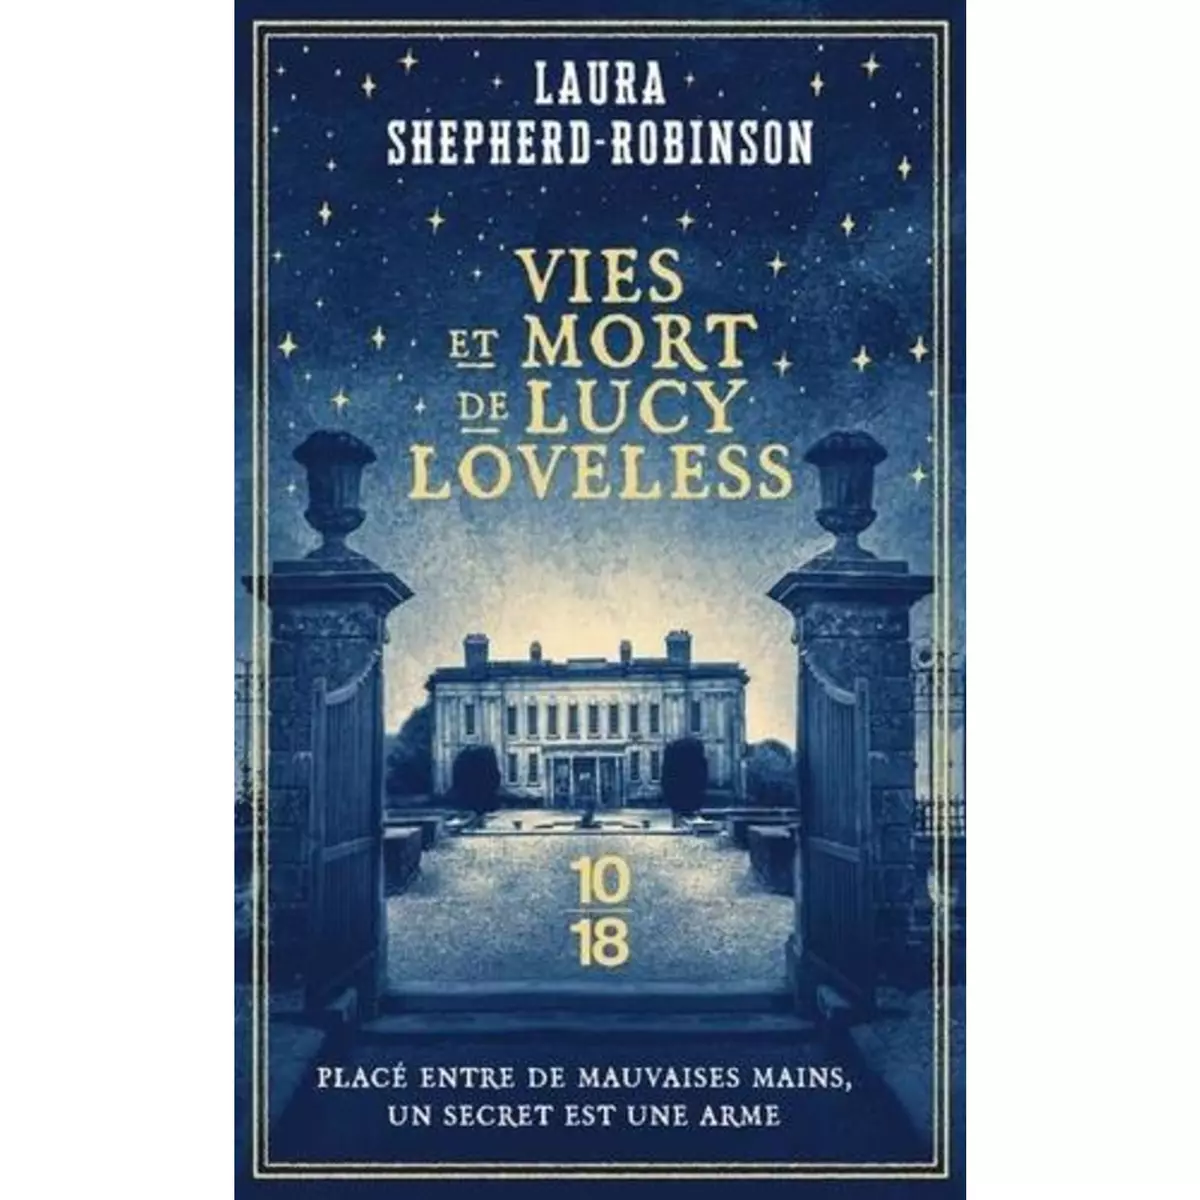  VIES ET MORT DE LUCY LOVELESS, Shepherd-Robinson Laura